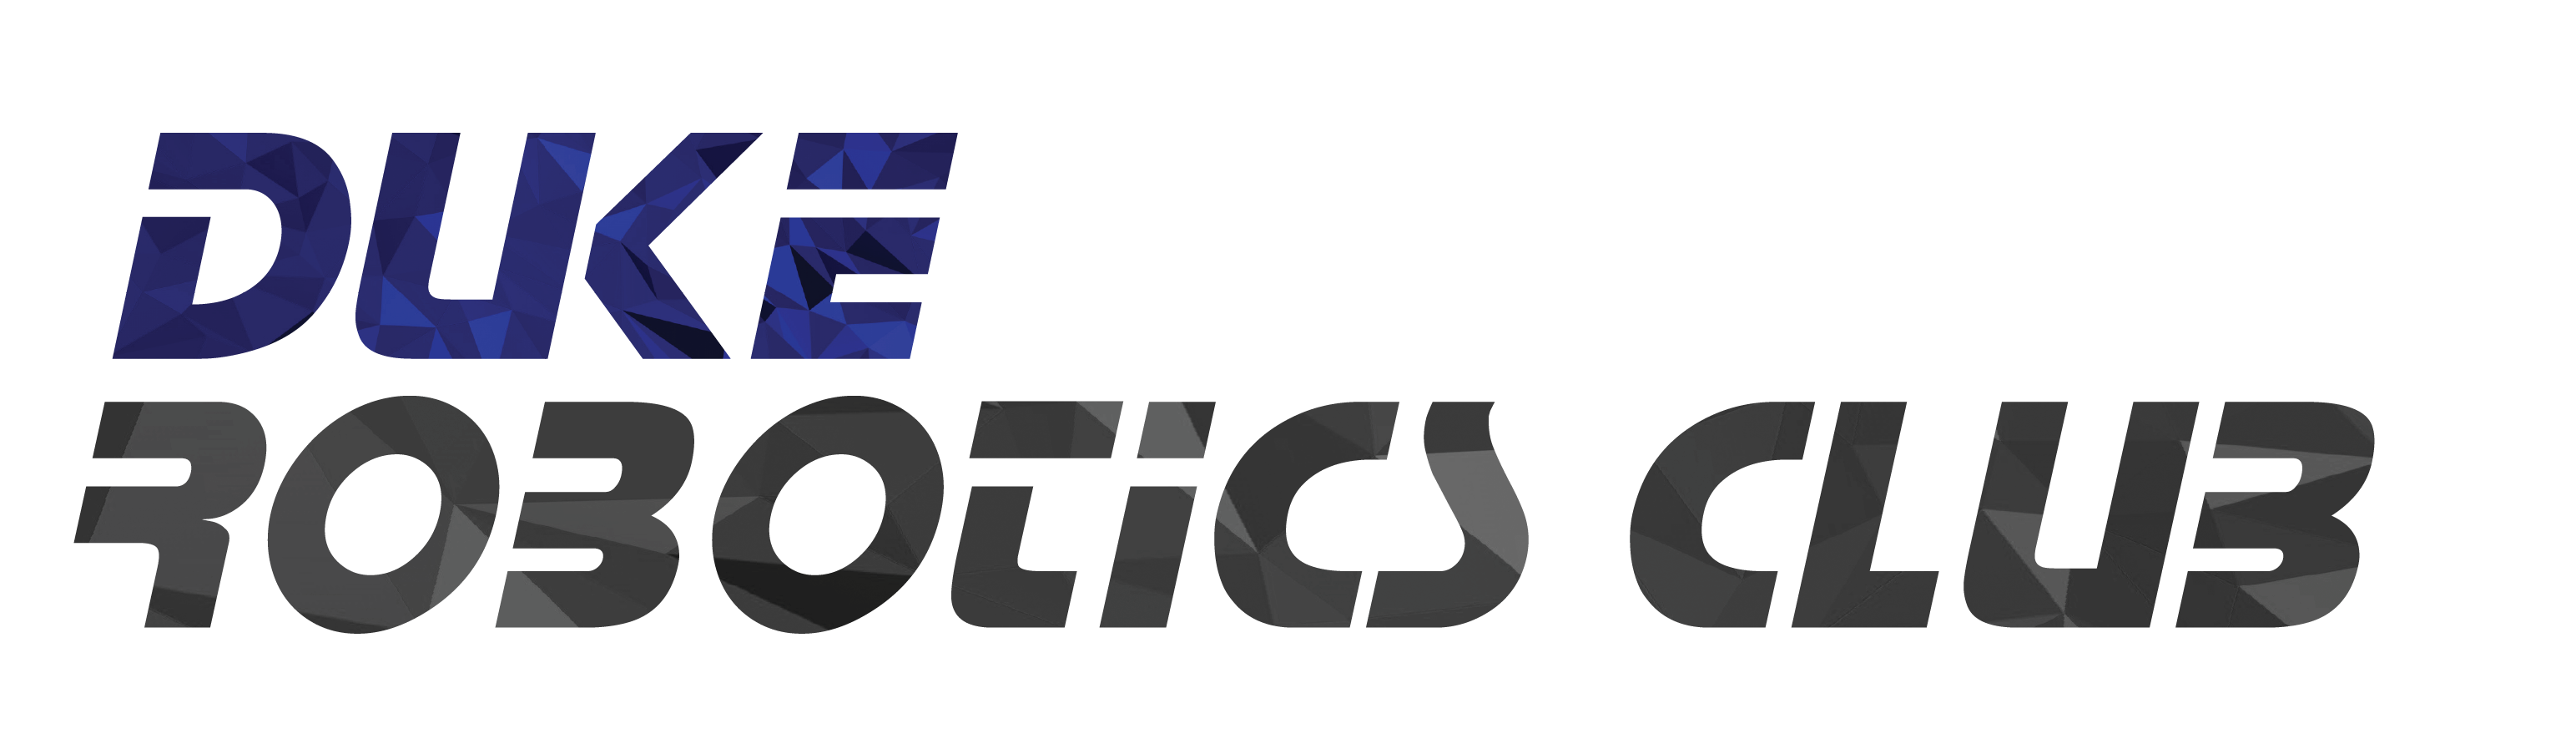 Robotics Club logo